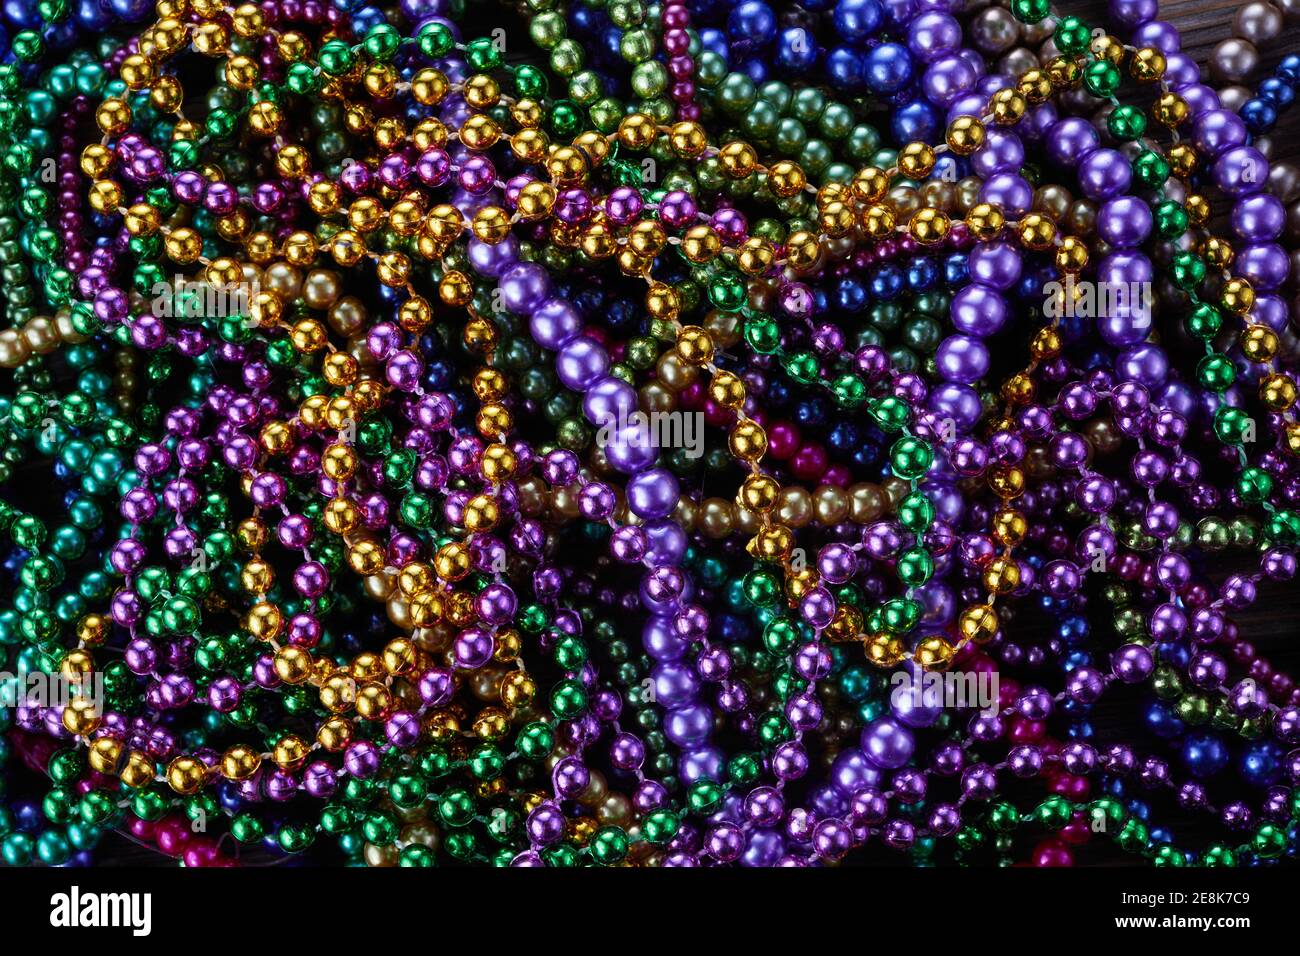 https://c8.alamy.com/comp/2E8K7C9/colorful-mardi-gras-beads-background-green-purple-and-gold-merdi-gras-beads-2E8K7C9.jpg